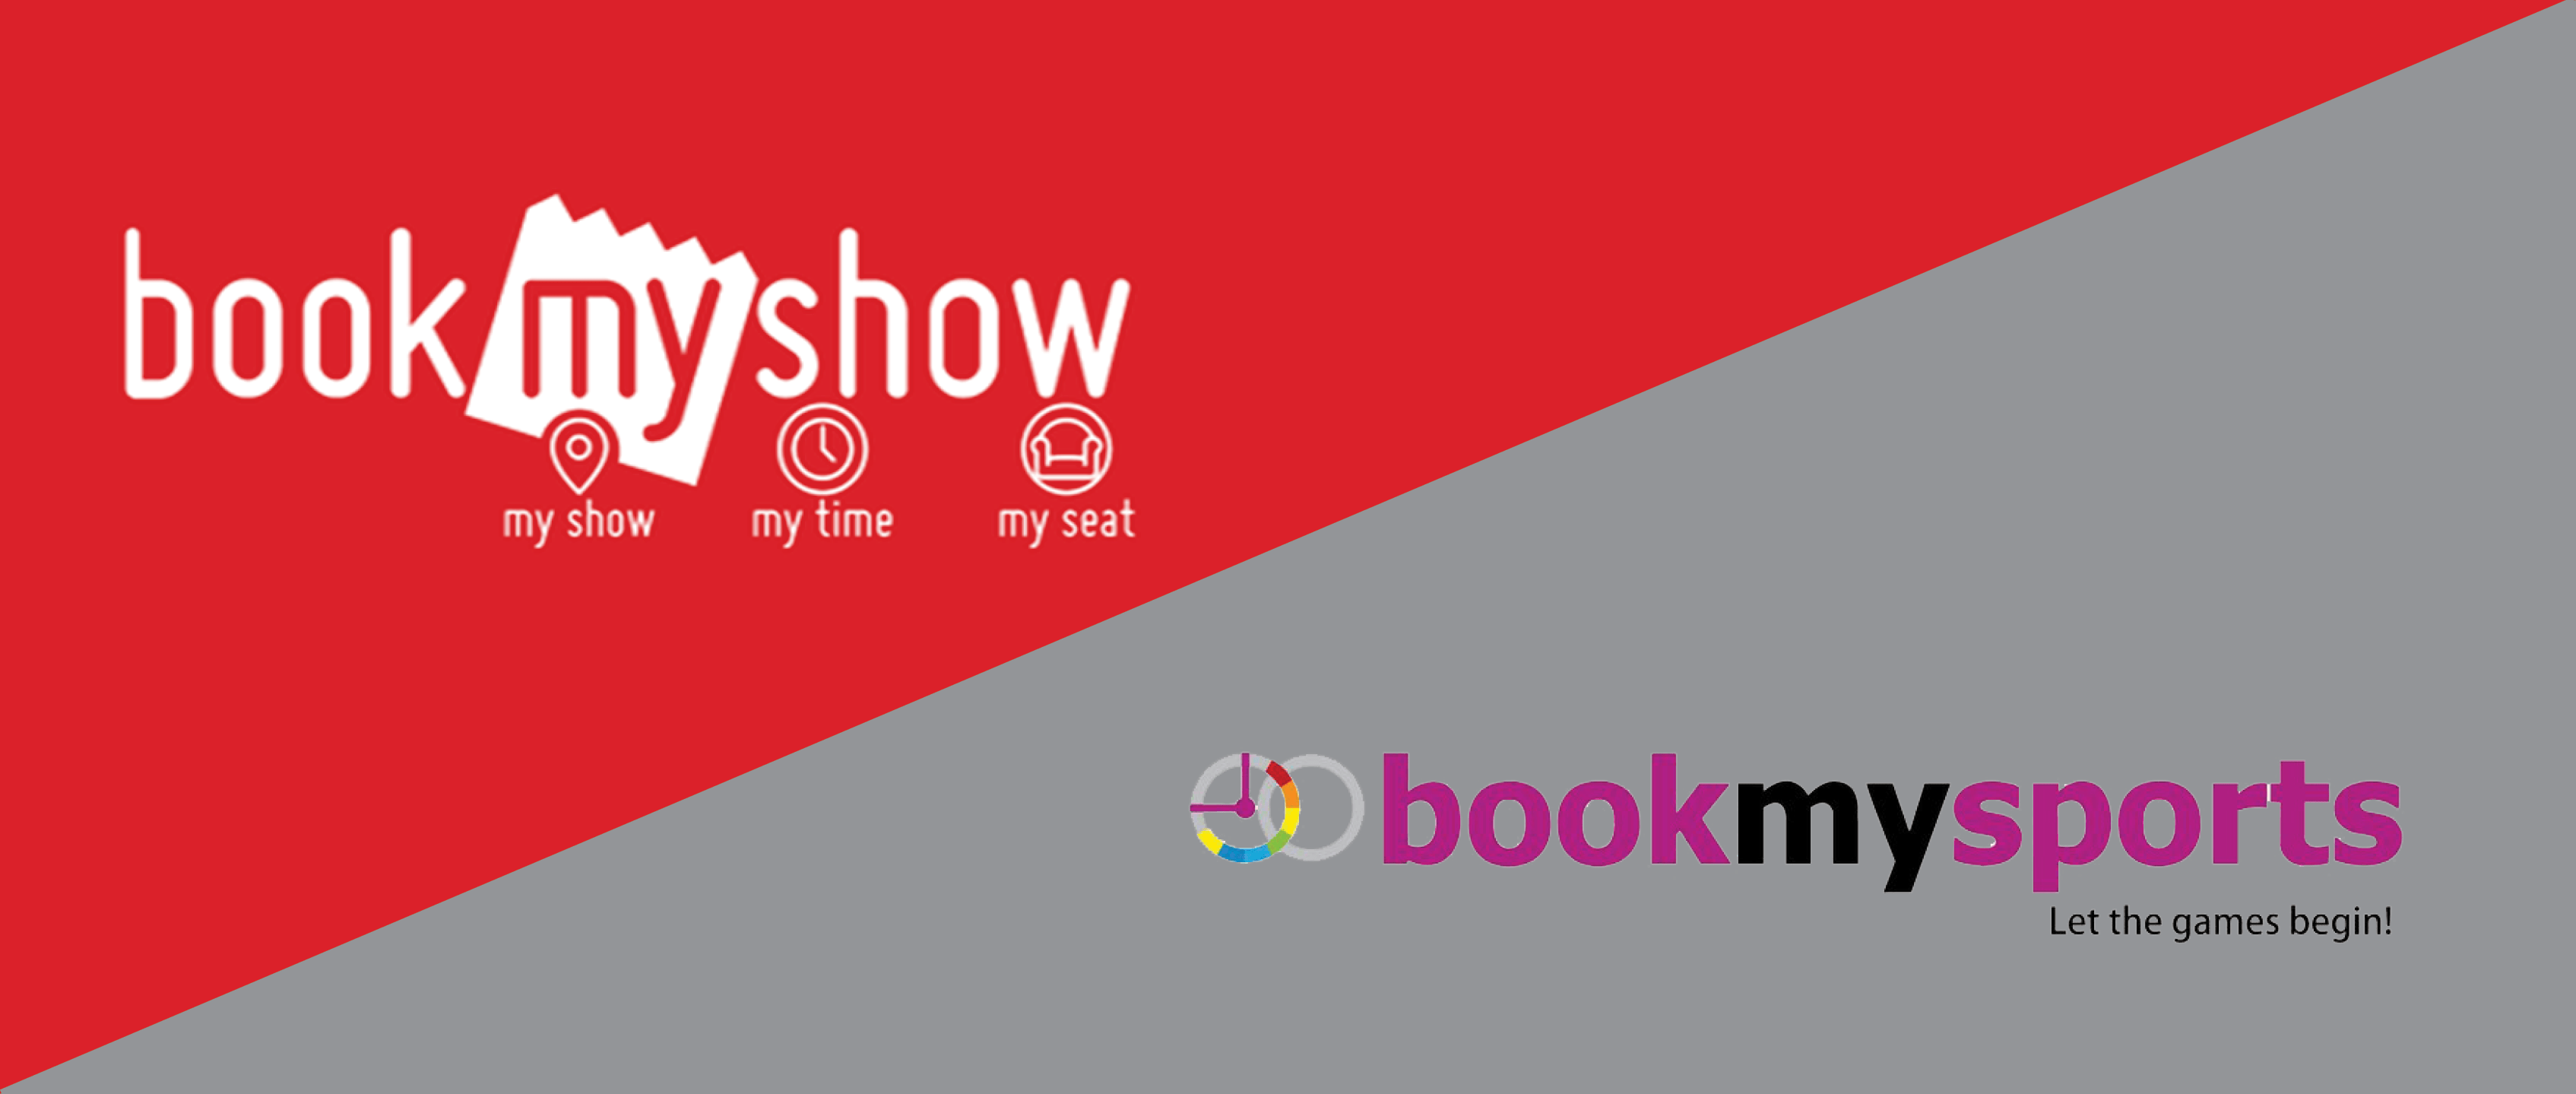 Bookmyshow Logo - BOOKMYSHOW vs. BOOKMYSPORTS & Associates